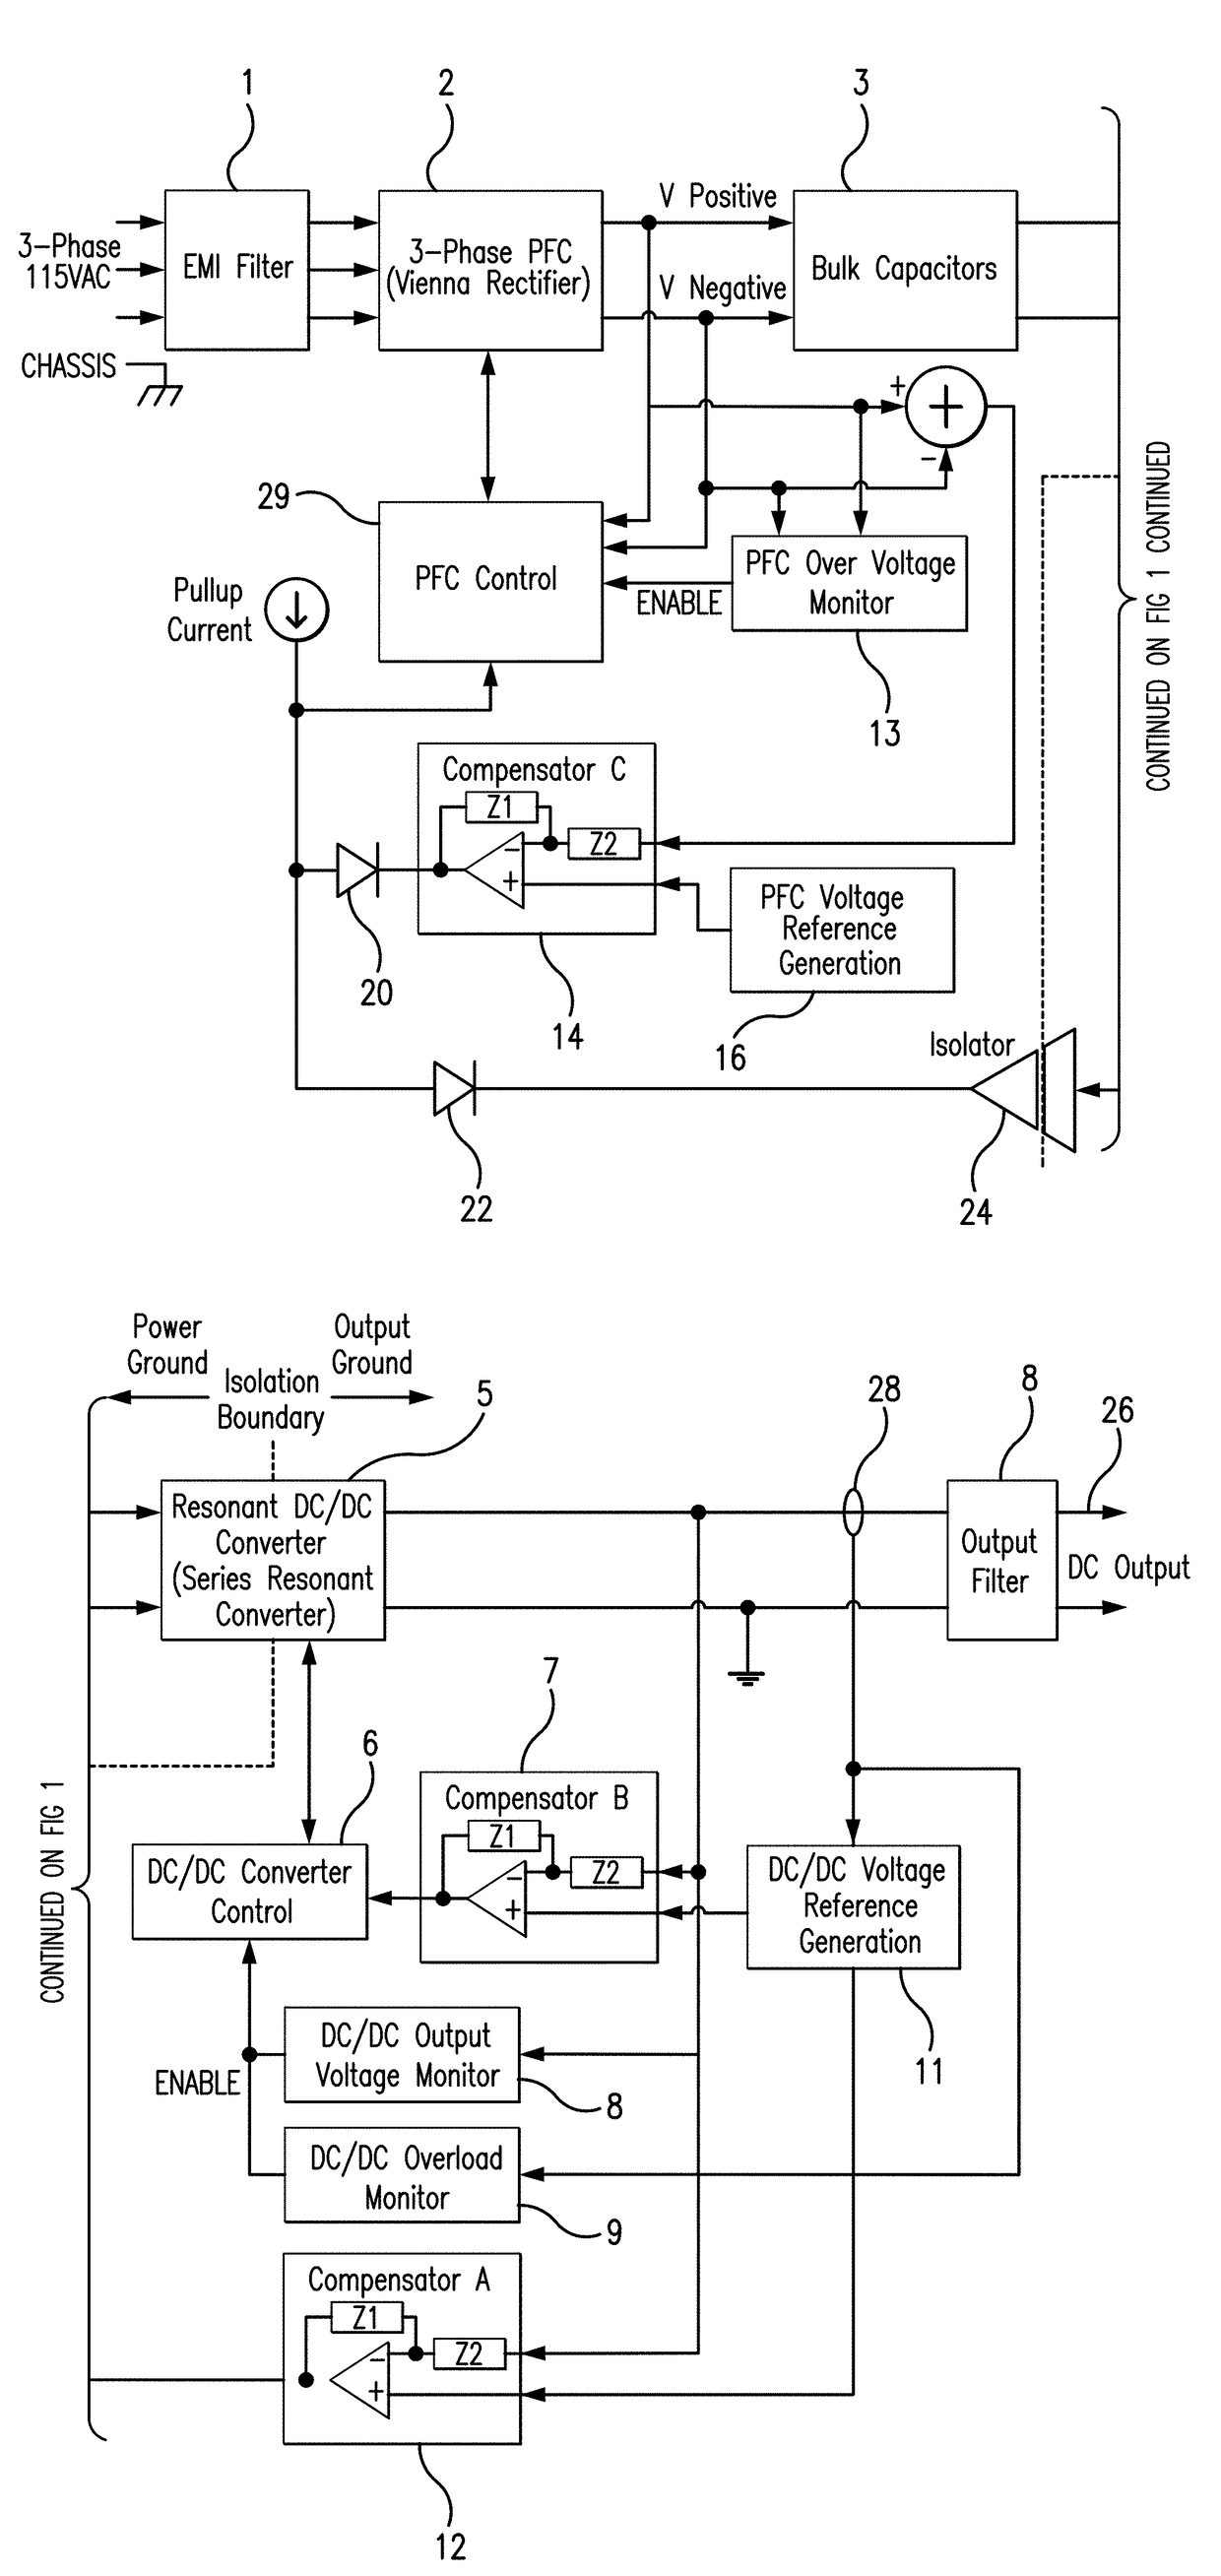 Regulating transformer rectifier unit for DC power applications